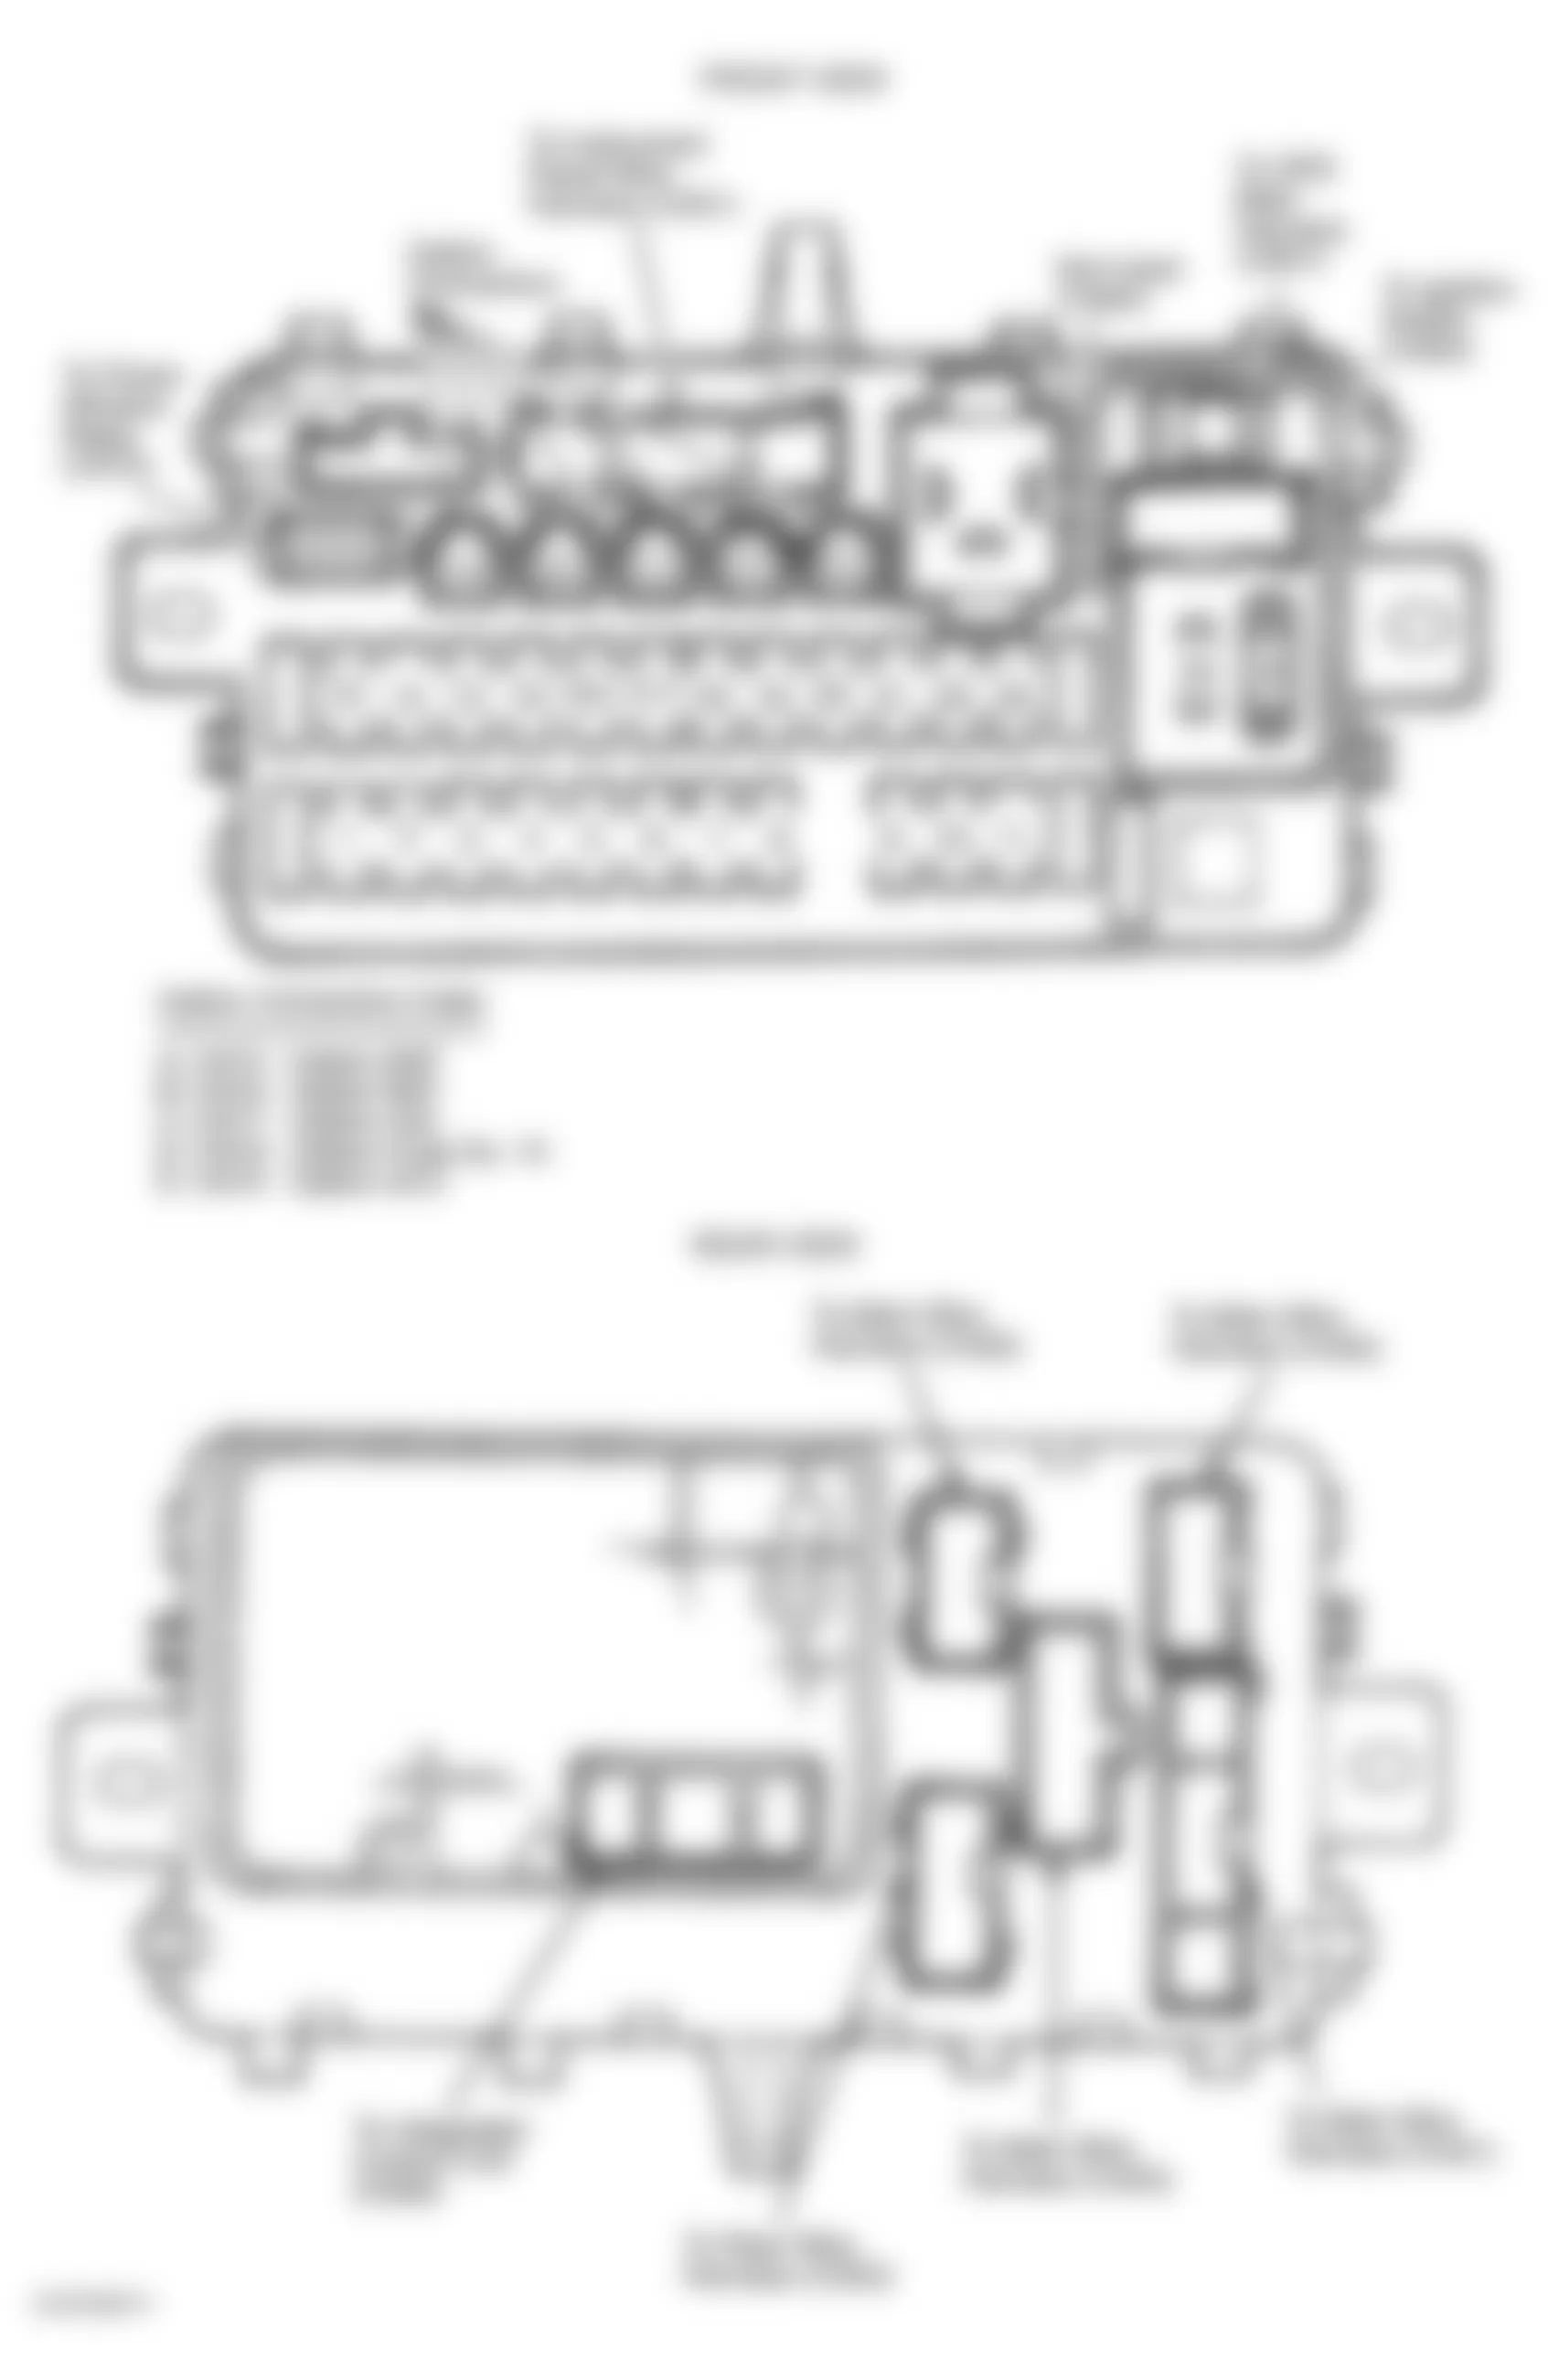 Honda Civic del Sol S 1995 - Component Locations -  Identifying Under-Dash Fuse/Relay Box Components (1994-95 Civic Del Sol)